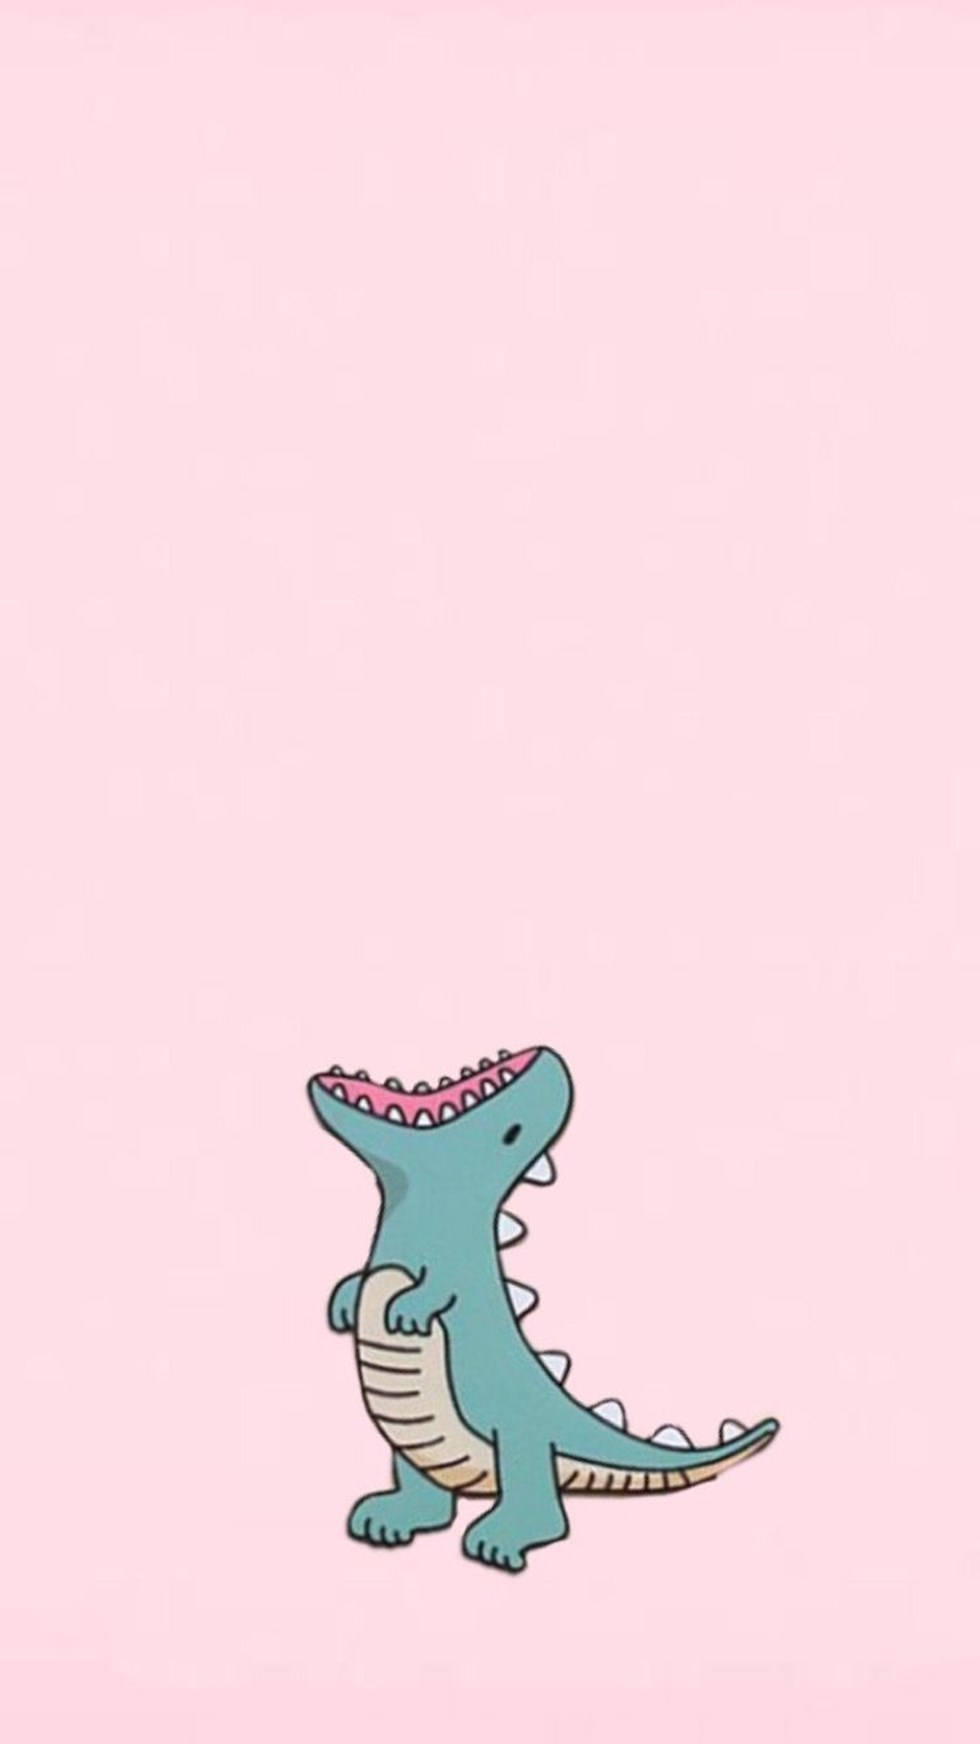 A Cartoon Crocodile On A Pink Background Wallpaper